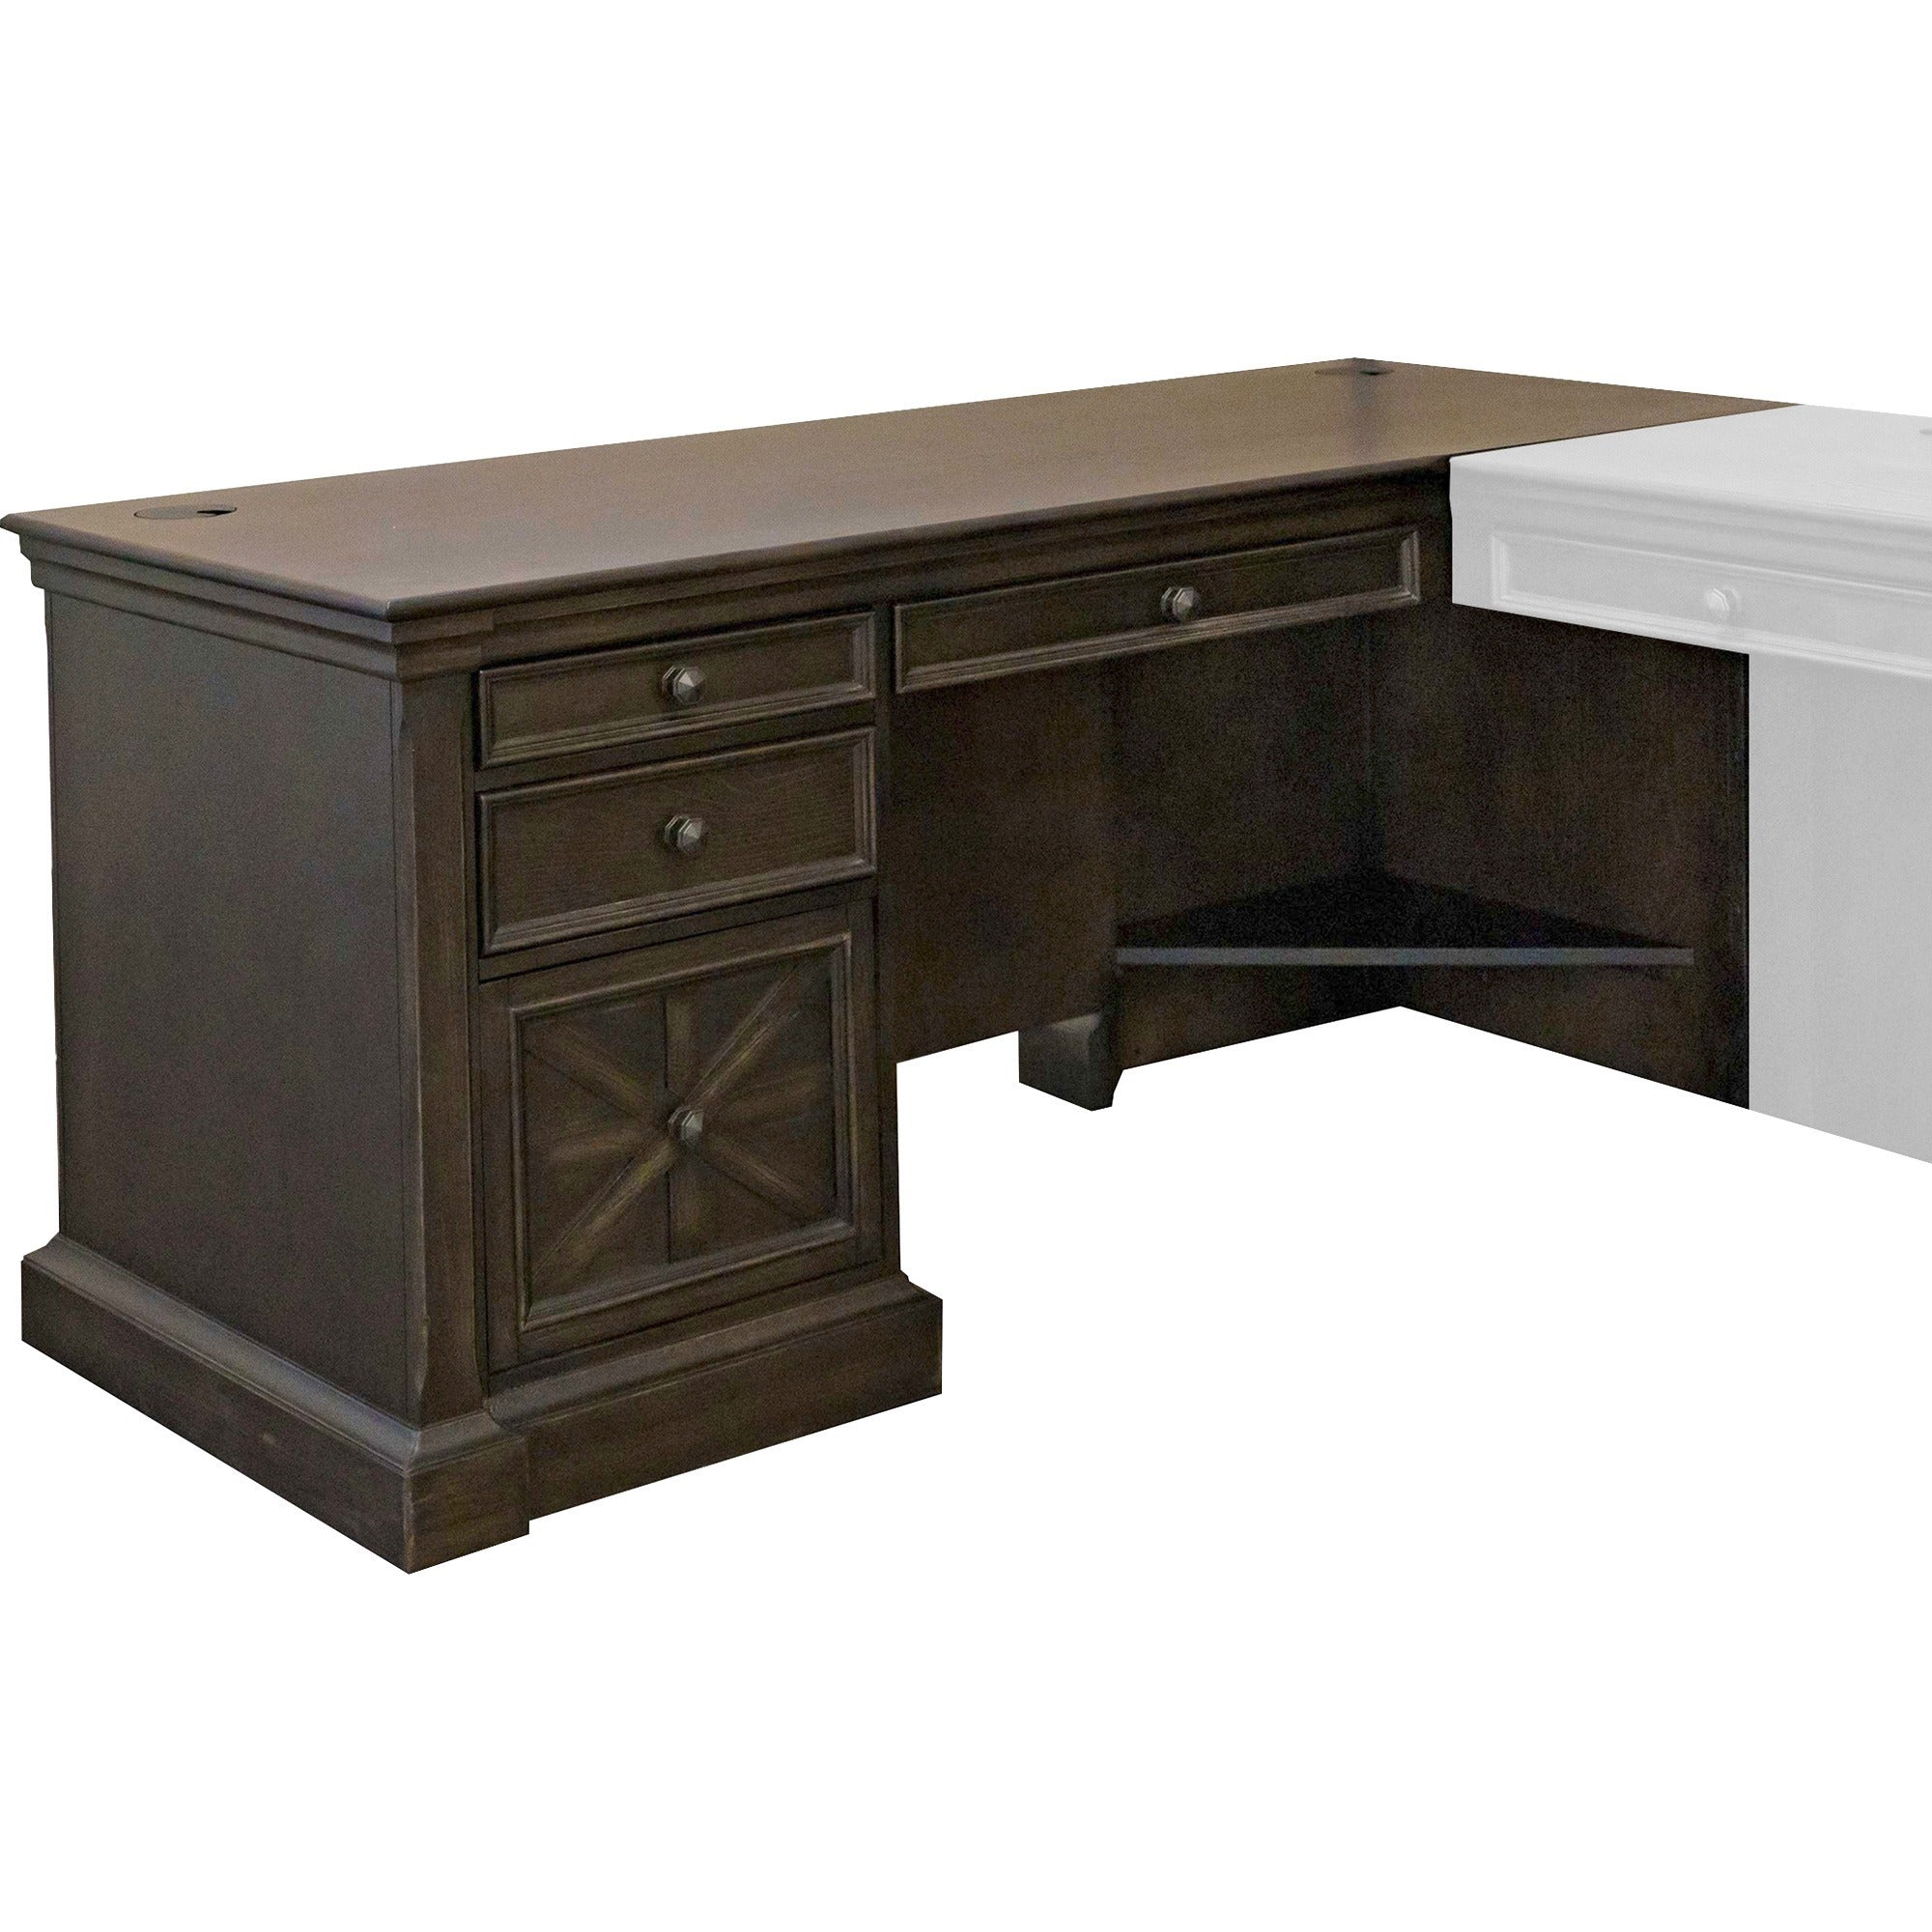 martin-kingston-desk-with-pedestal-box-1-of-2-66-x-3030-4-x-utility-file-drawers-material-wood-finish-dark-chocolate-rub-through_mrtimkn684r - 1